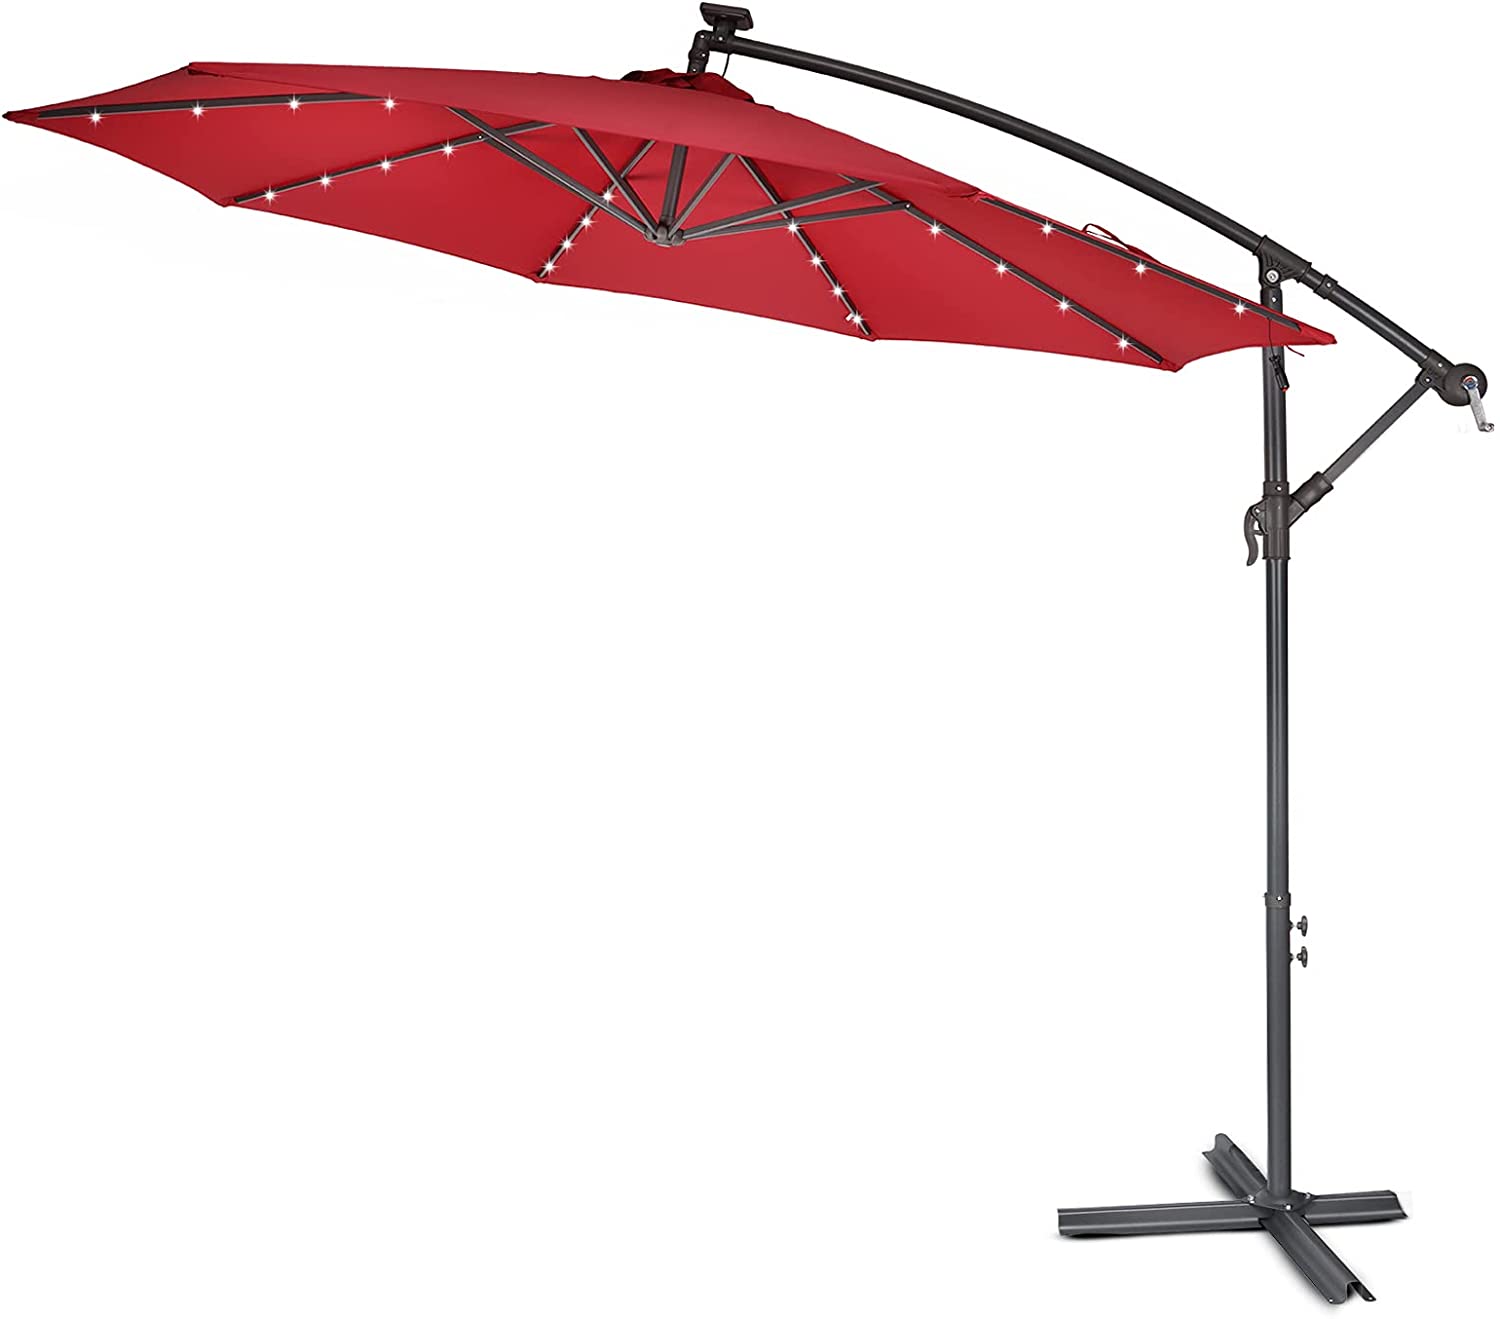 SUNBRANO Solar Outdoor Offset Umbrella